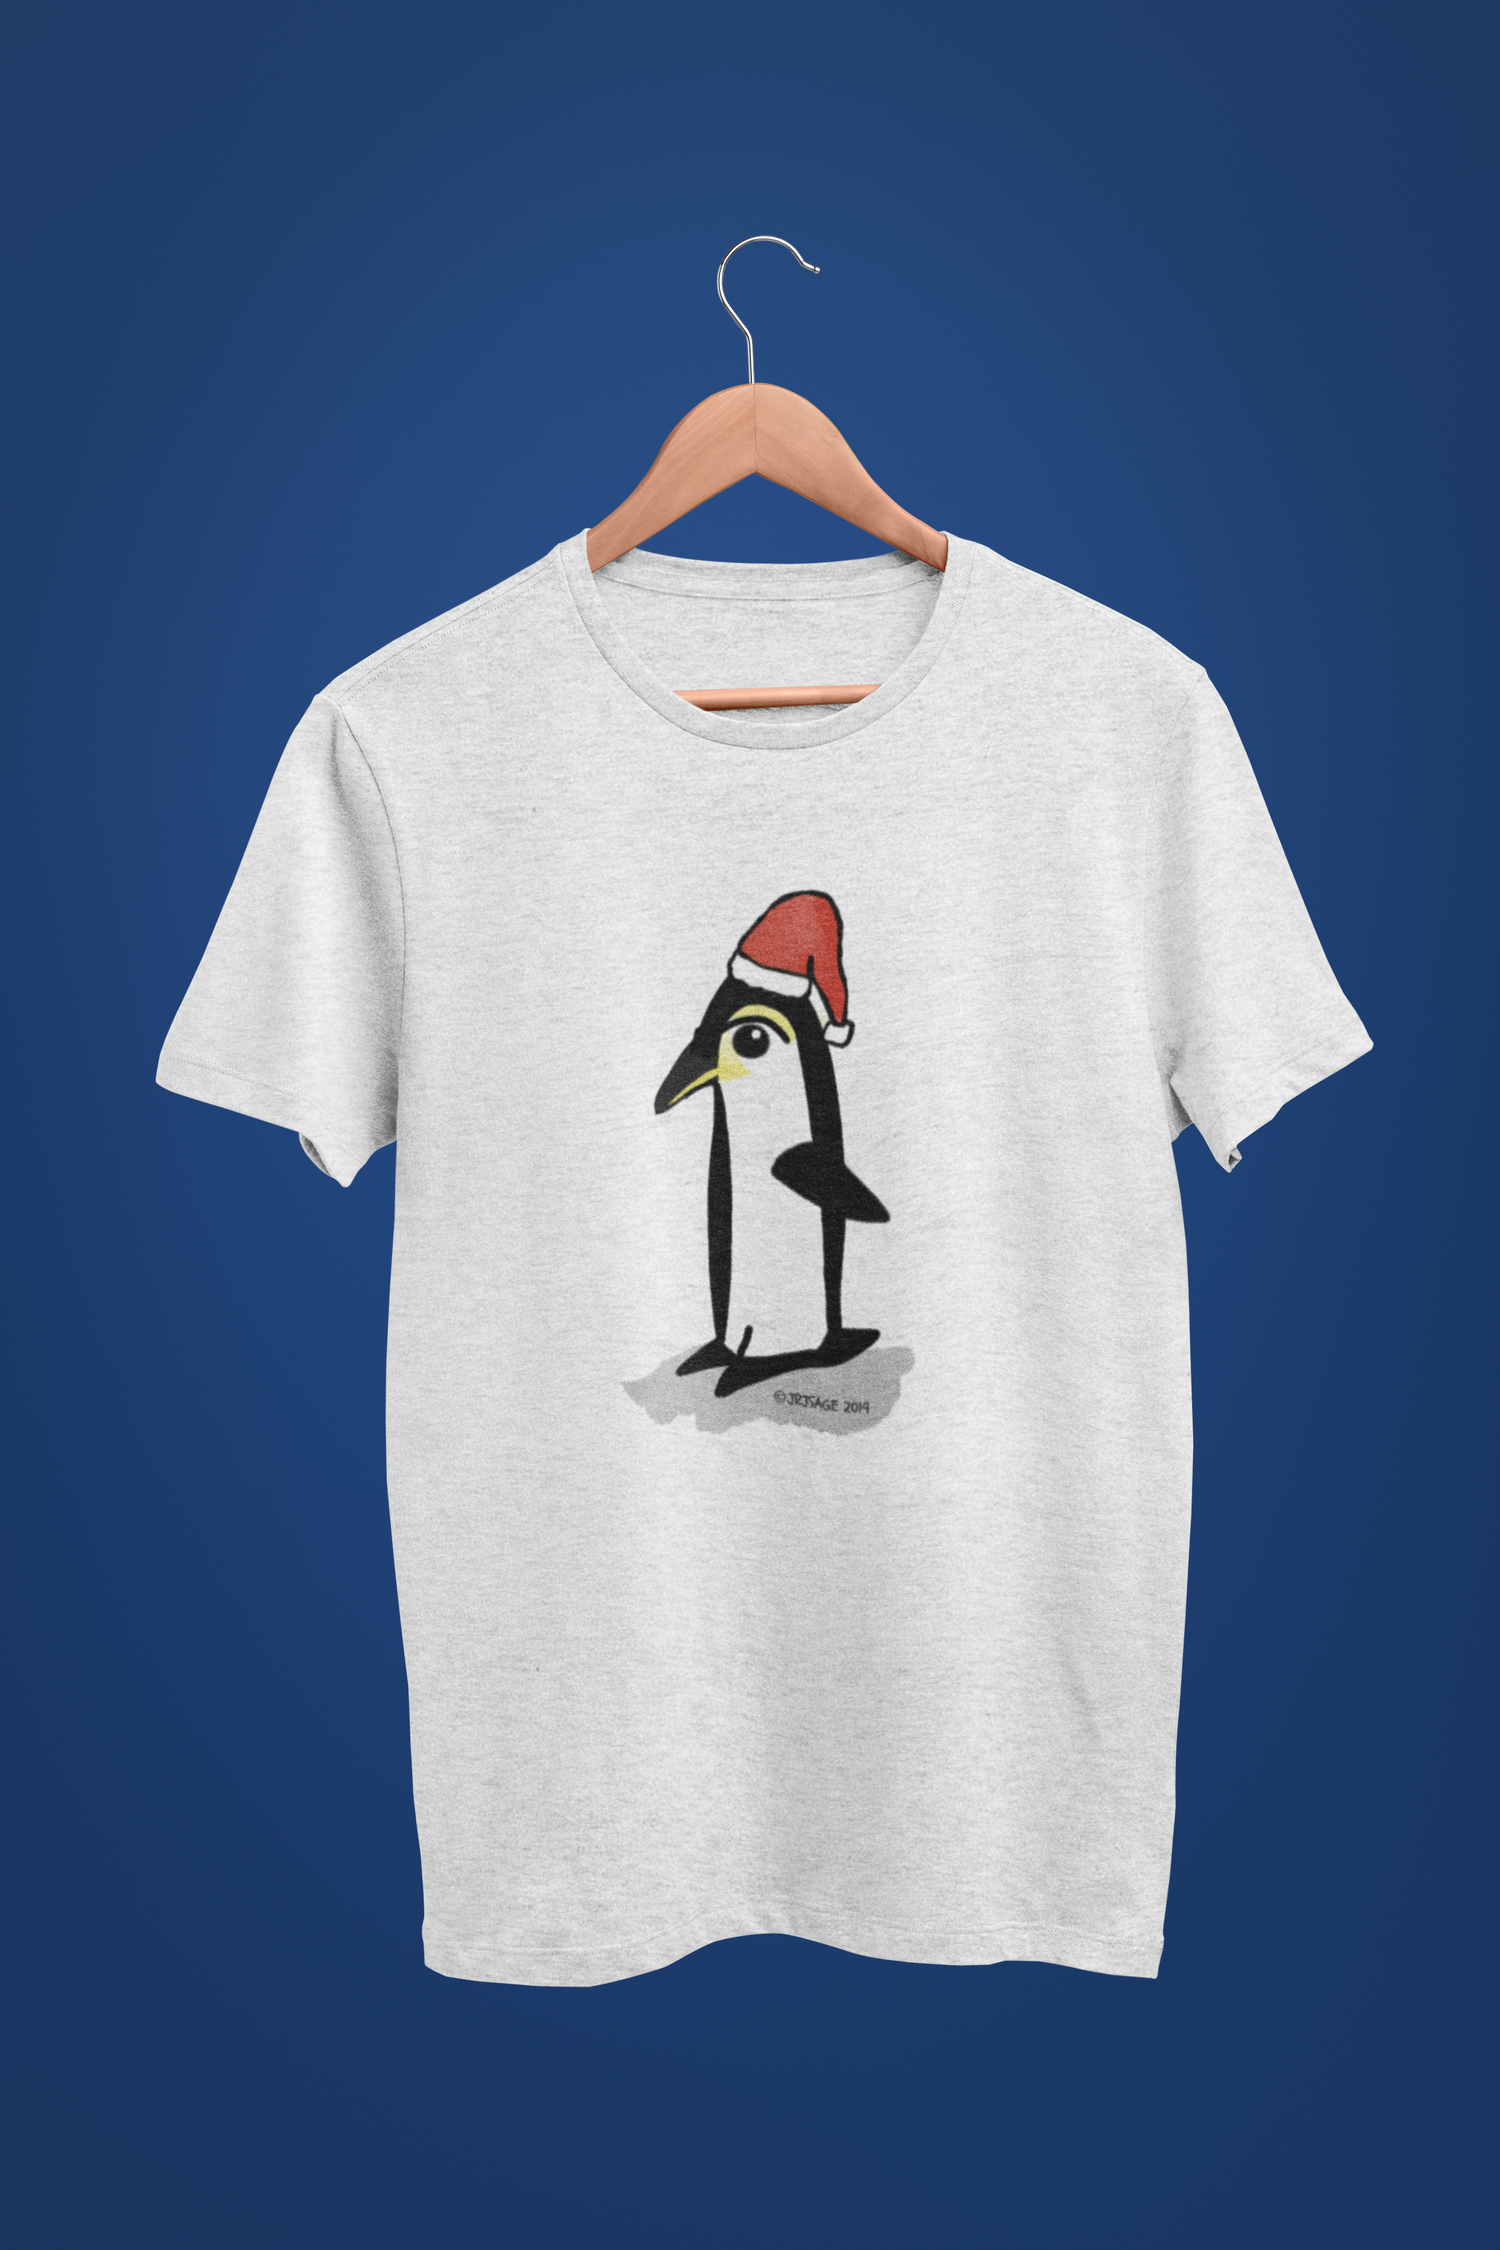 Santa Penguin cute Christmas T-shirt illustrated design by Hector and Bone on a Vegan cotton cream heather grey tee shirt